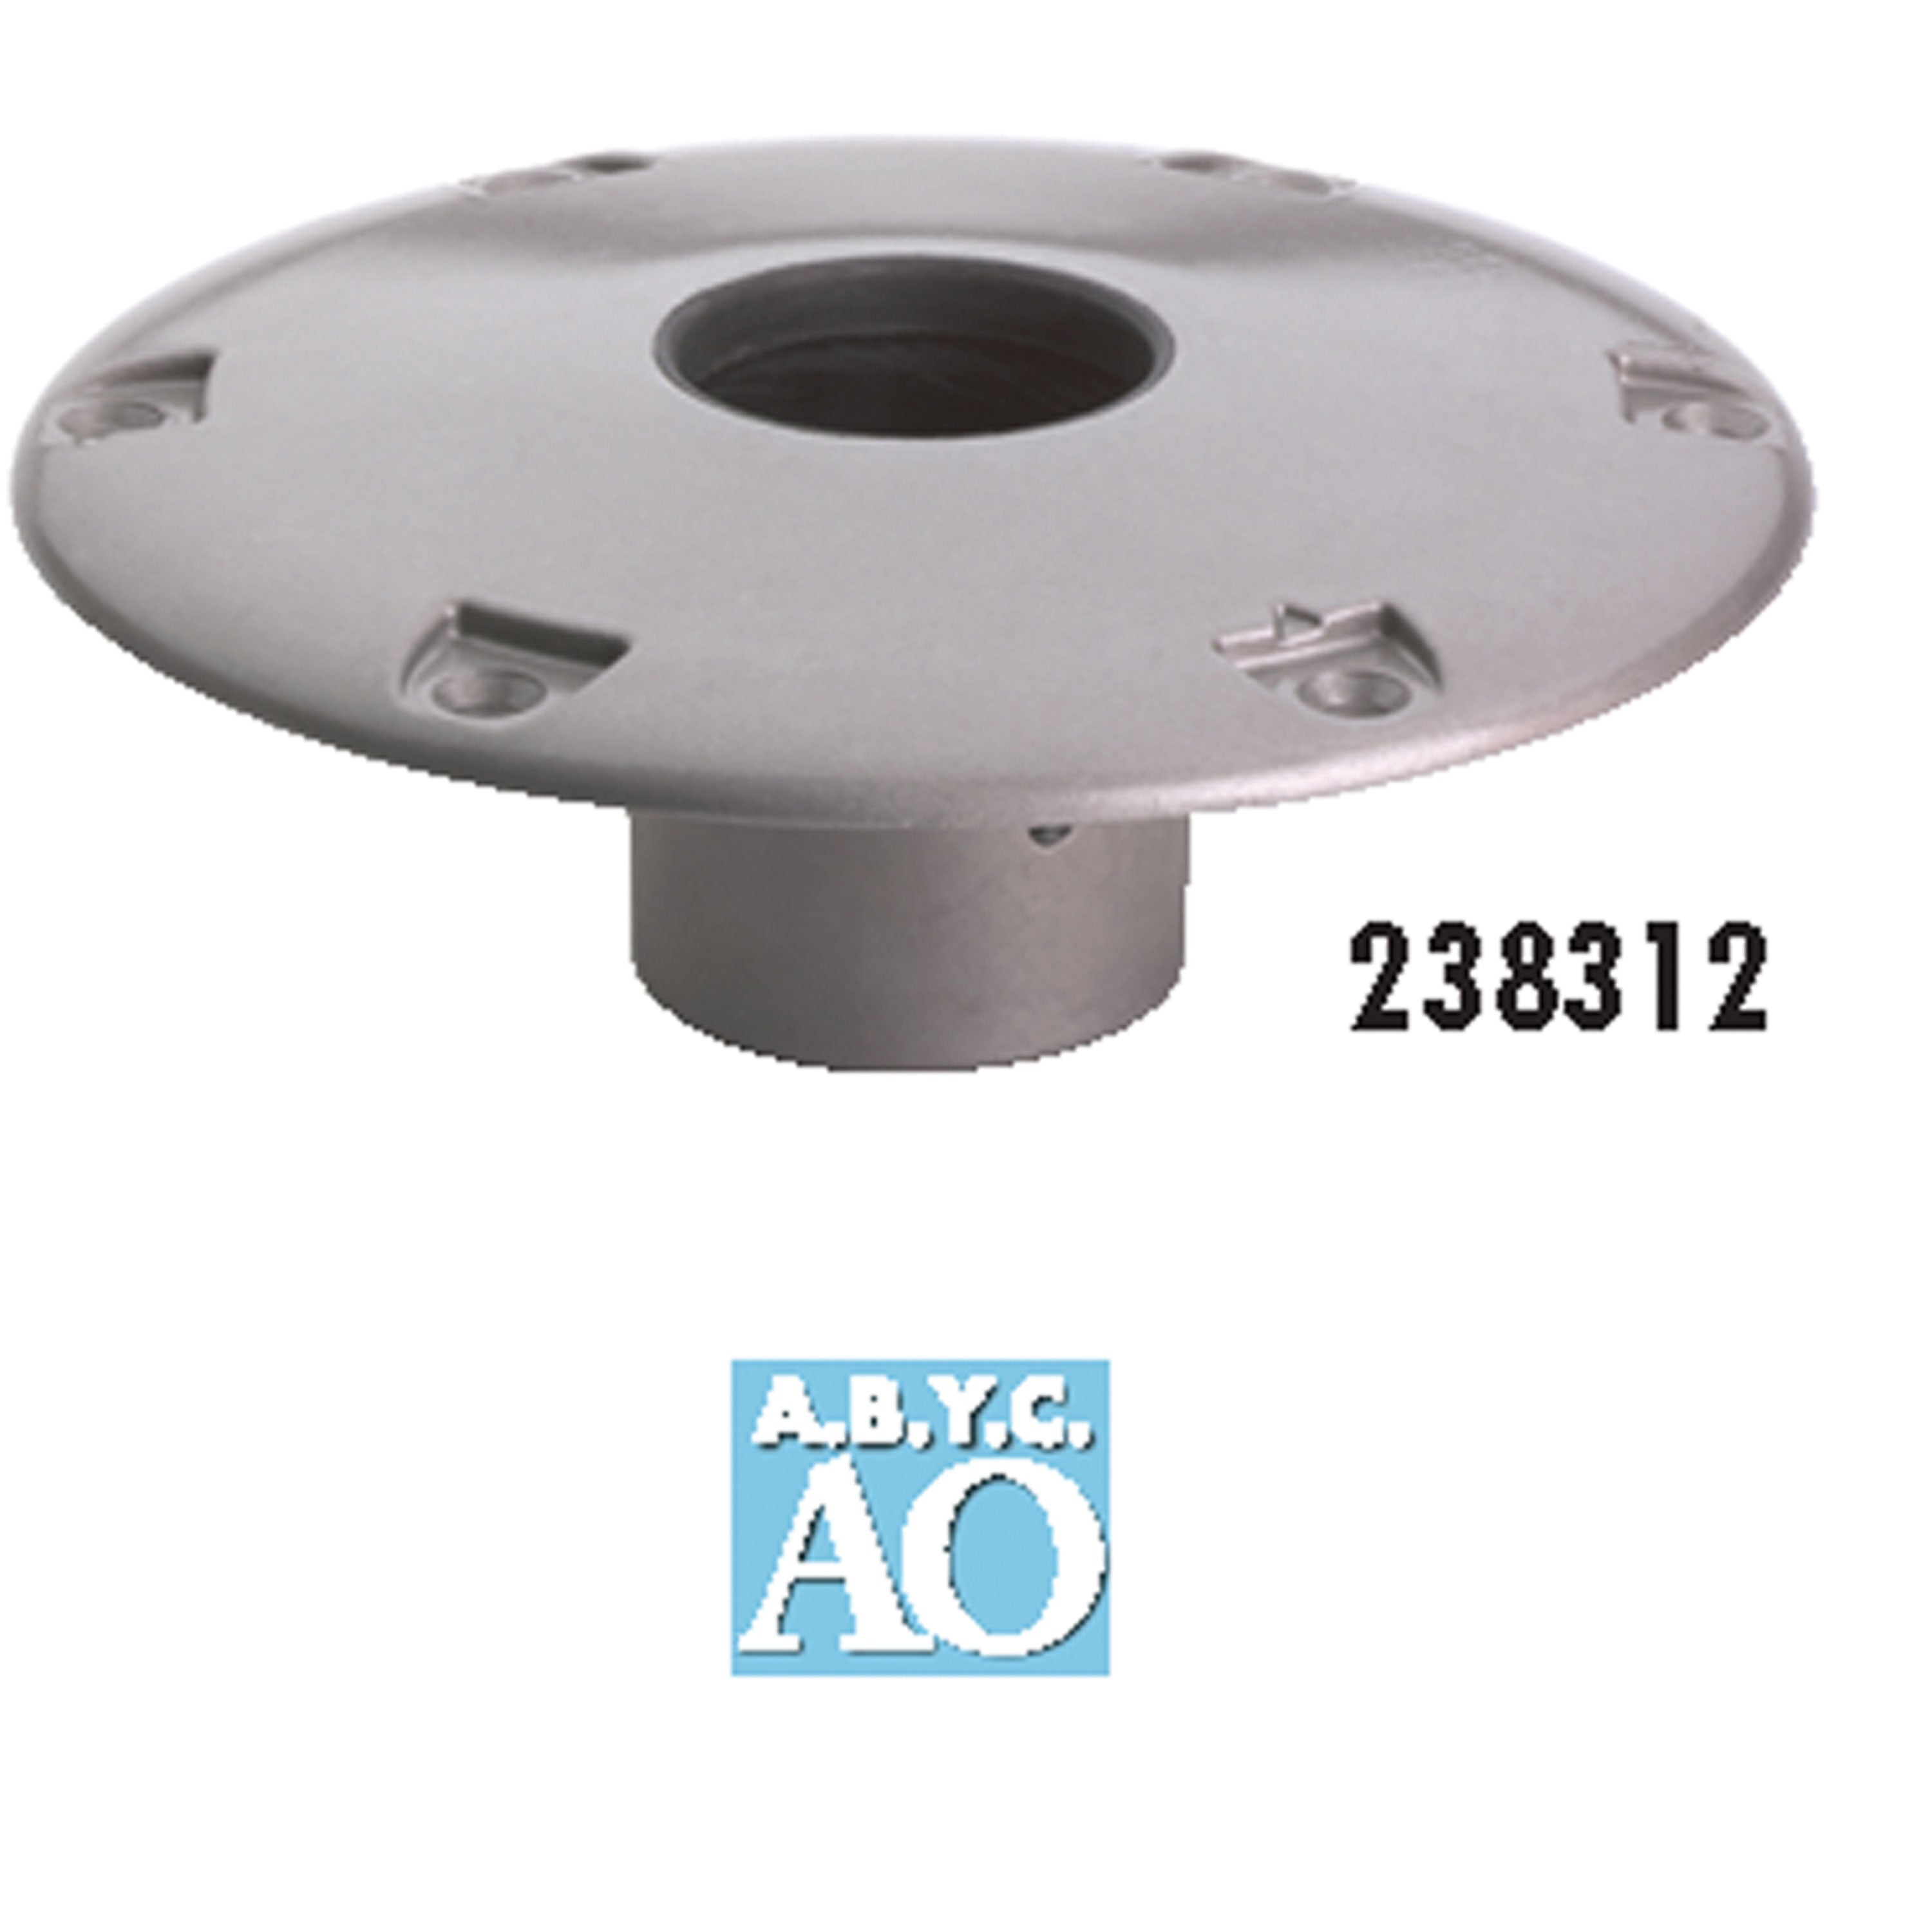 Attwood 238312-2 238 Series Aluminum Socket Base - 9" Round, Anodized